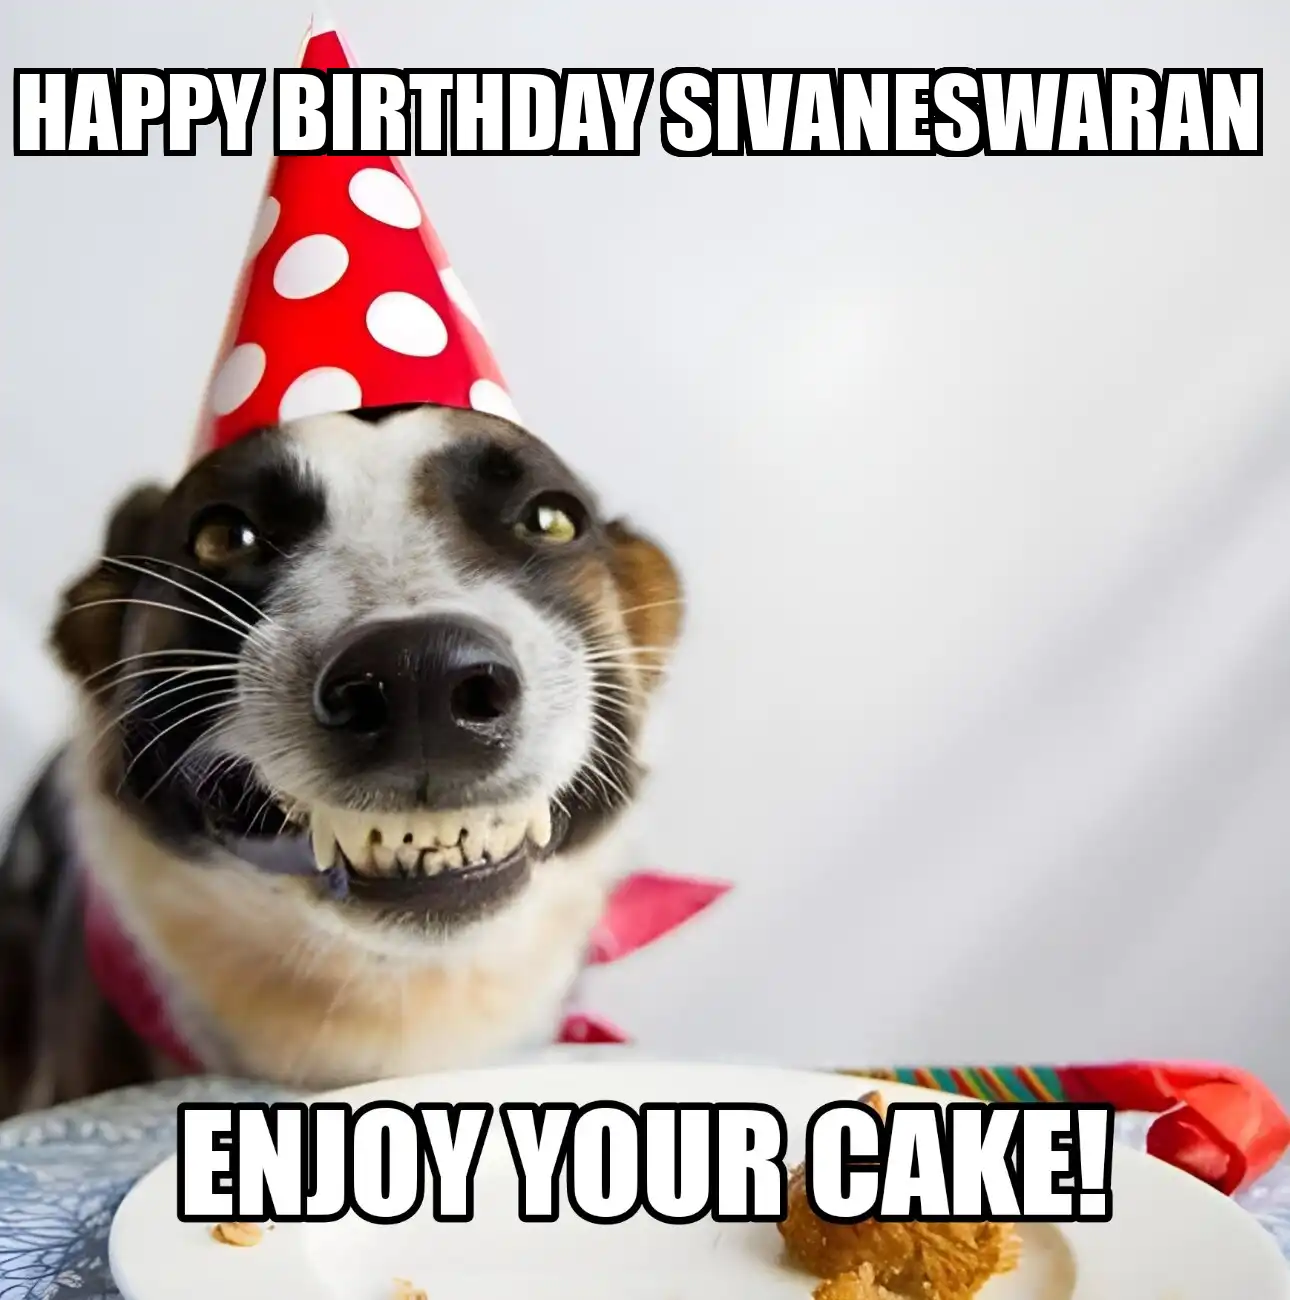 Happy Birthday Sivaneswaran Enjoy Your Cake Dog Meme